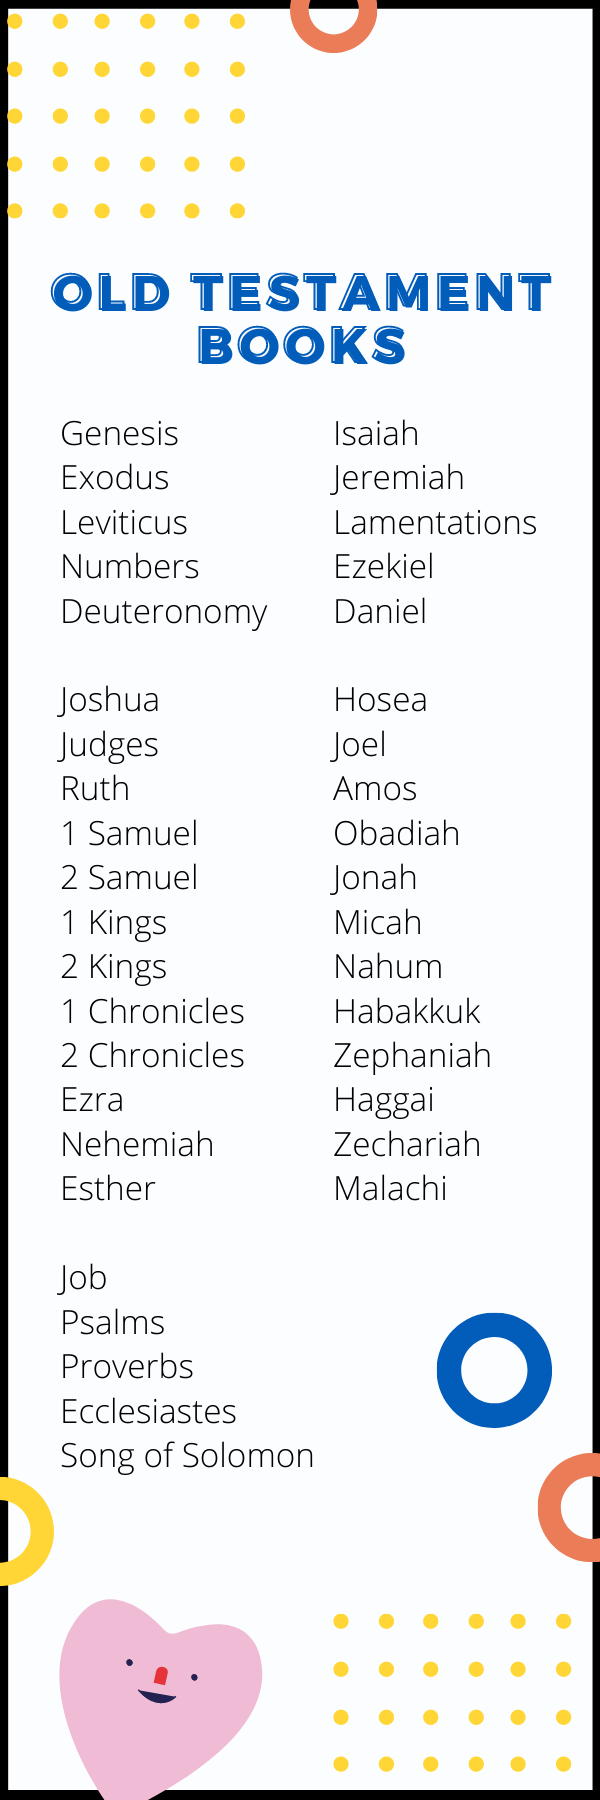 List of Old Testament books